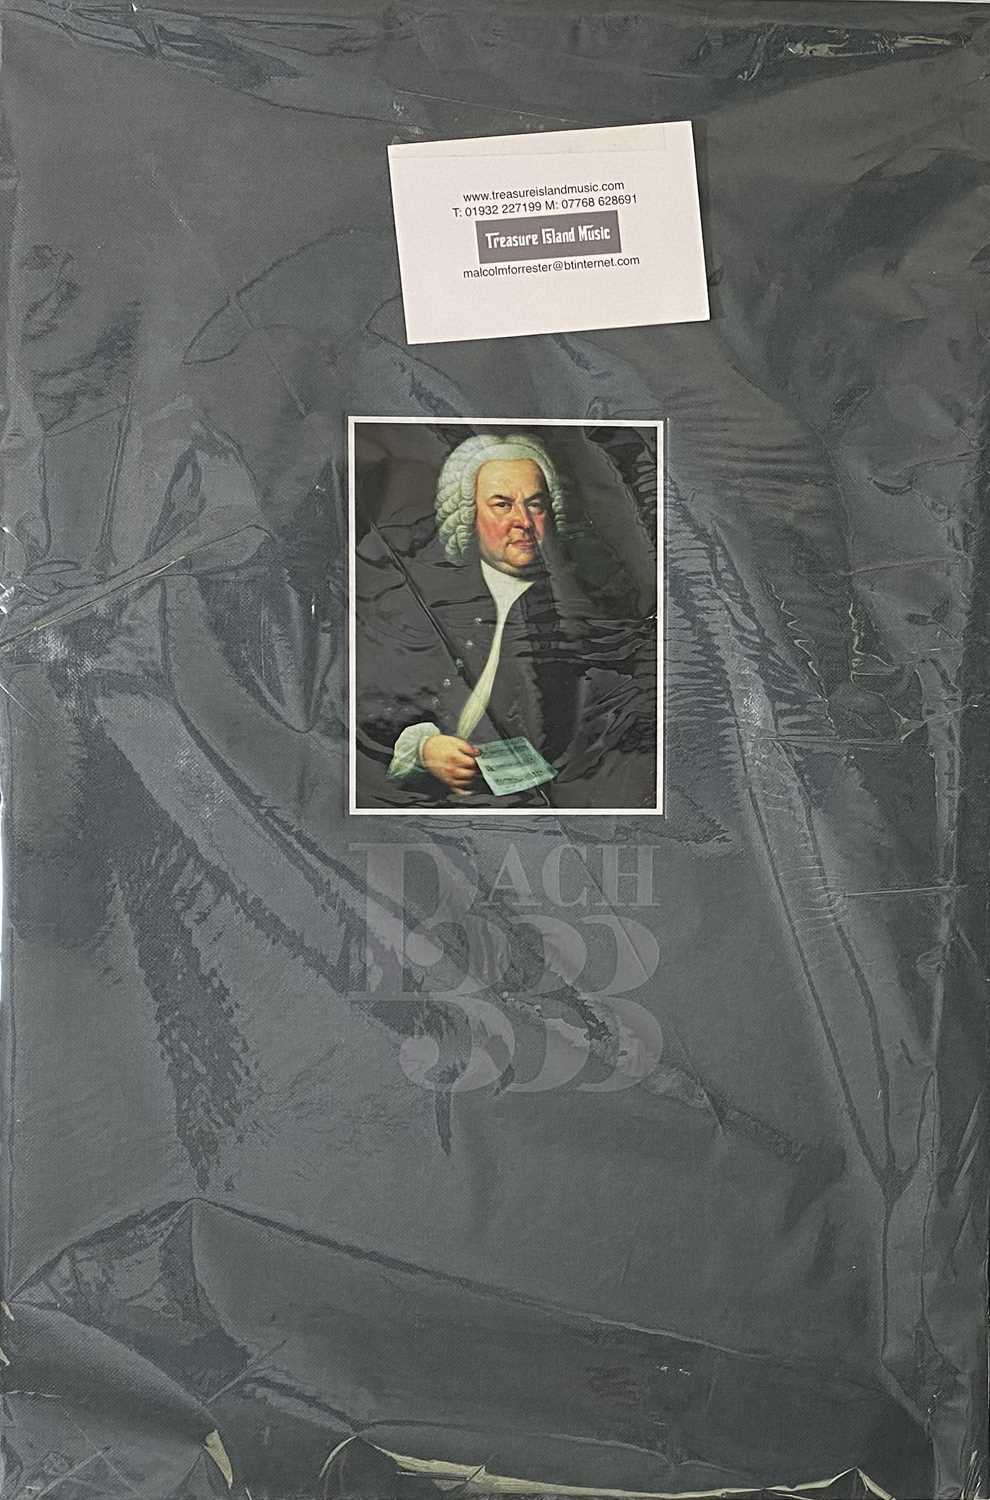 JOHANN SEBASTIAN BACH - BACH 333 - THE NEW COMPLETE EDITION - CD / DVD BOX SET